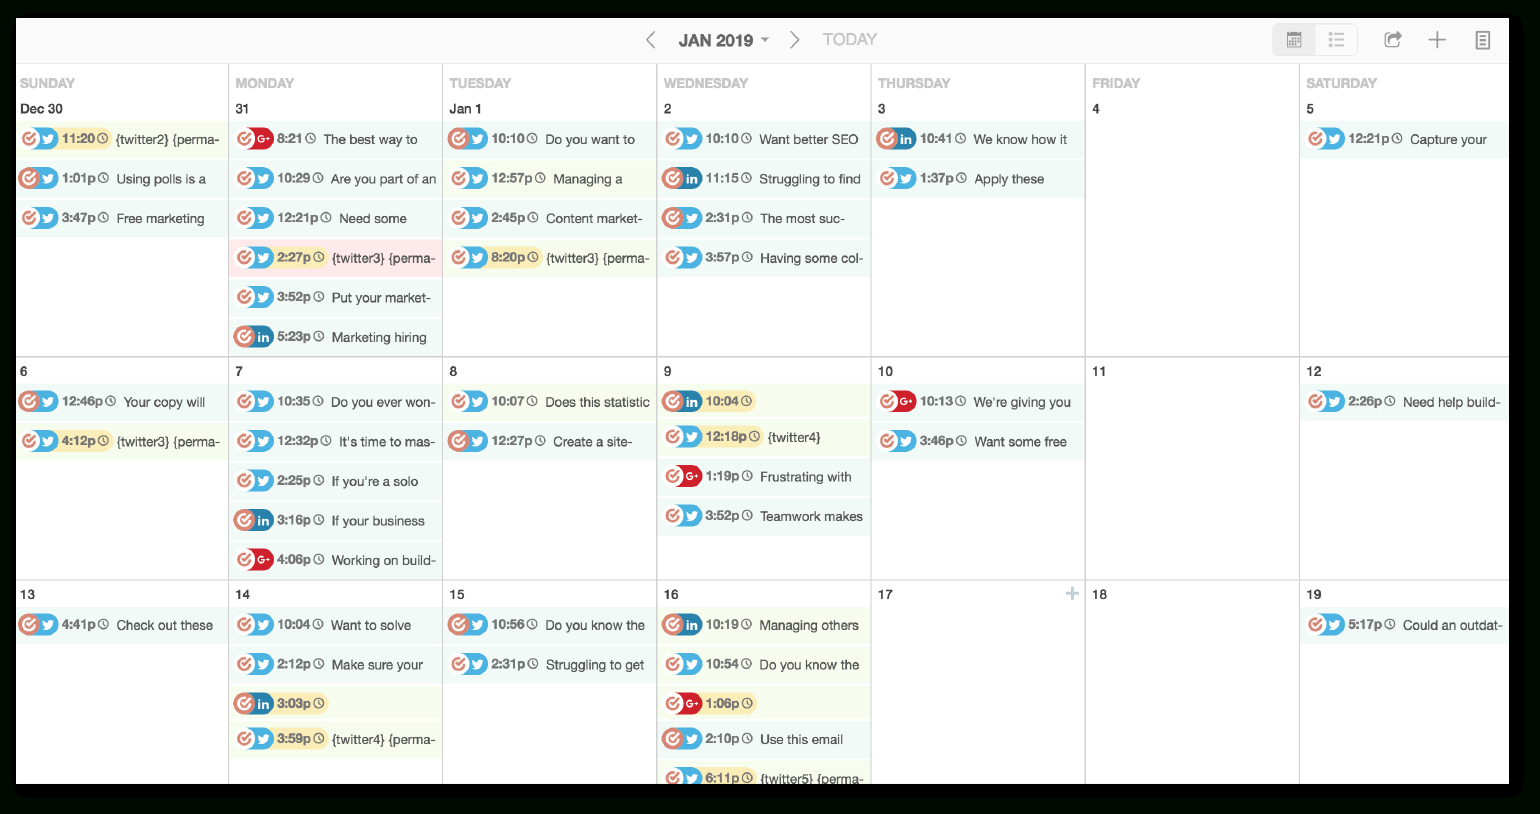 Content Calendar Spreadsheet In The Best 2019 Content Calendar Template: Get Organized All Year